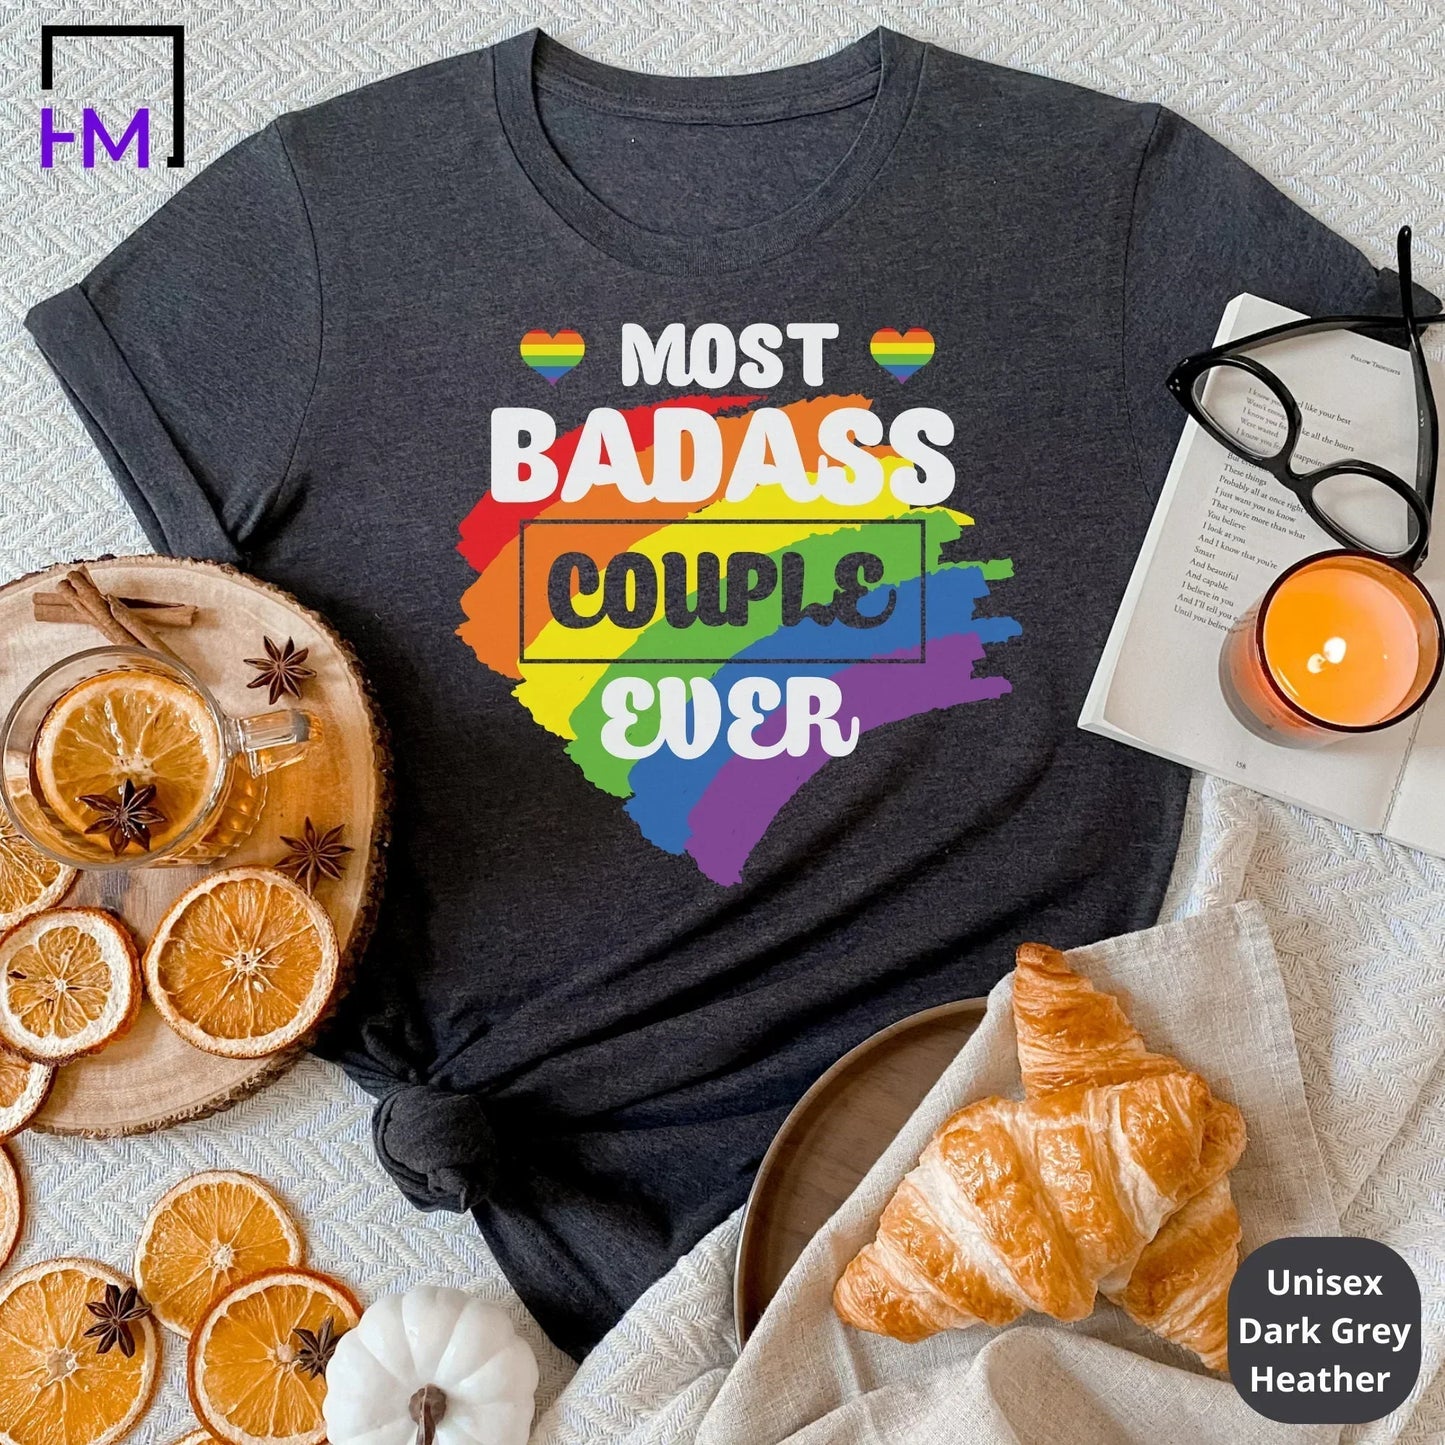 Couples Pride T-Shirts, LGBTQ Shirt, Matching Equality Shirt, Love is Love Shirt, Be Kind Gift, Gay Shirt, Human Rights Lesbian Women Tees